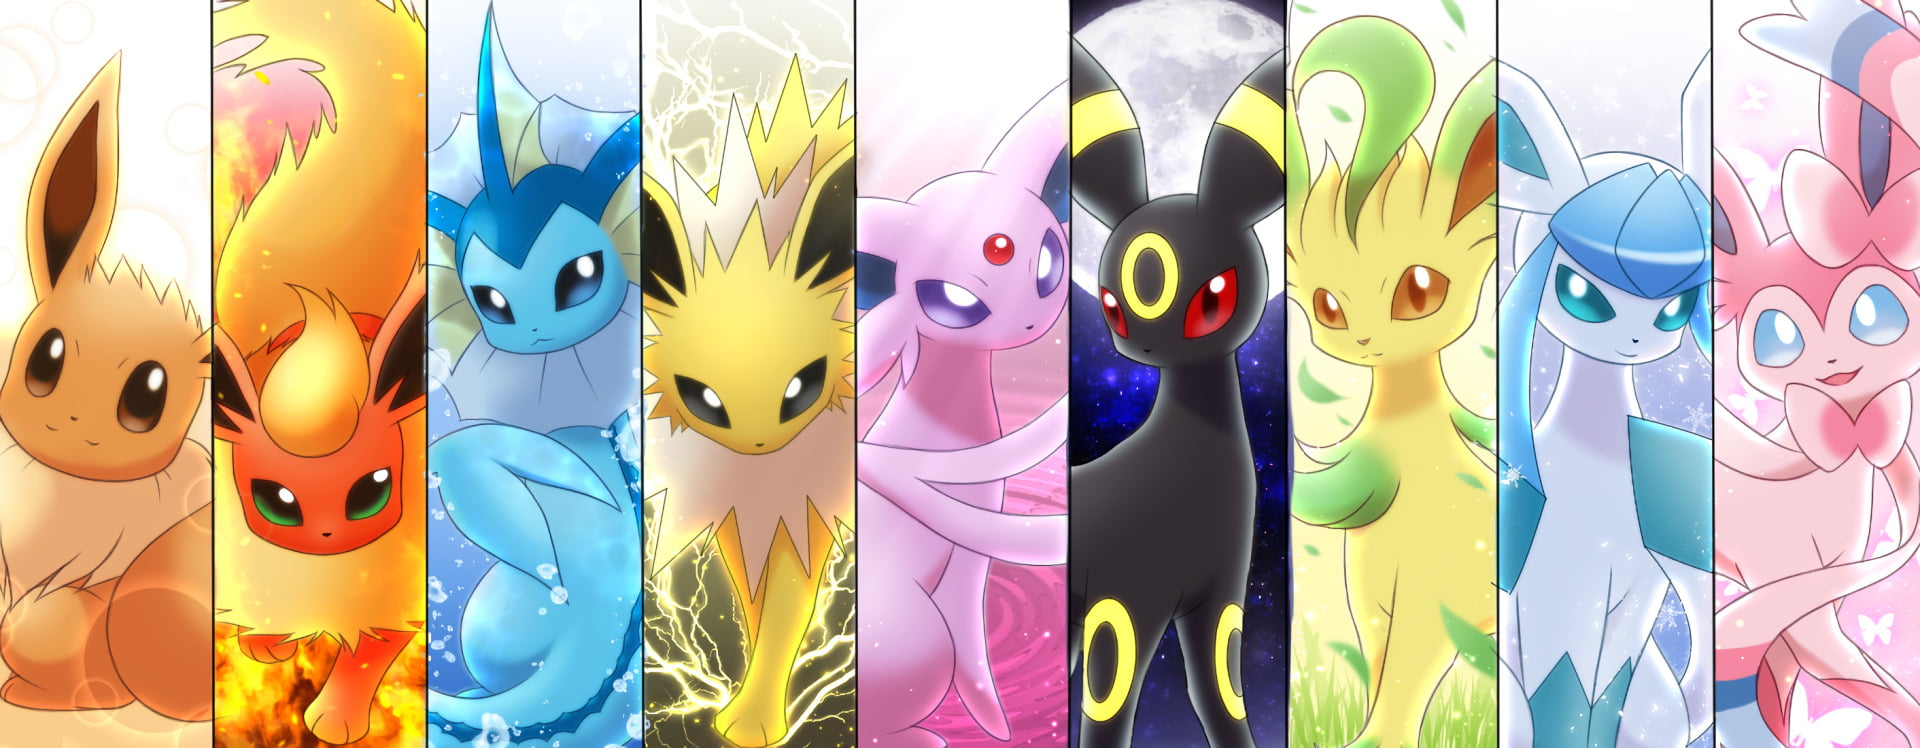 Wallpaper Pokemon Character Collage, Pokémon, Eevee Pokémon